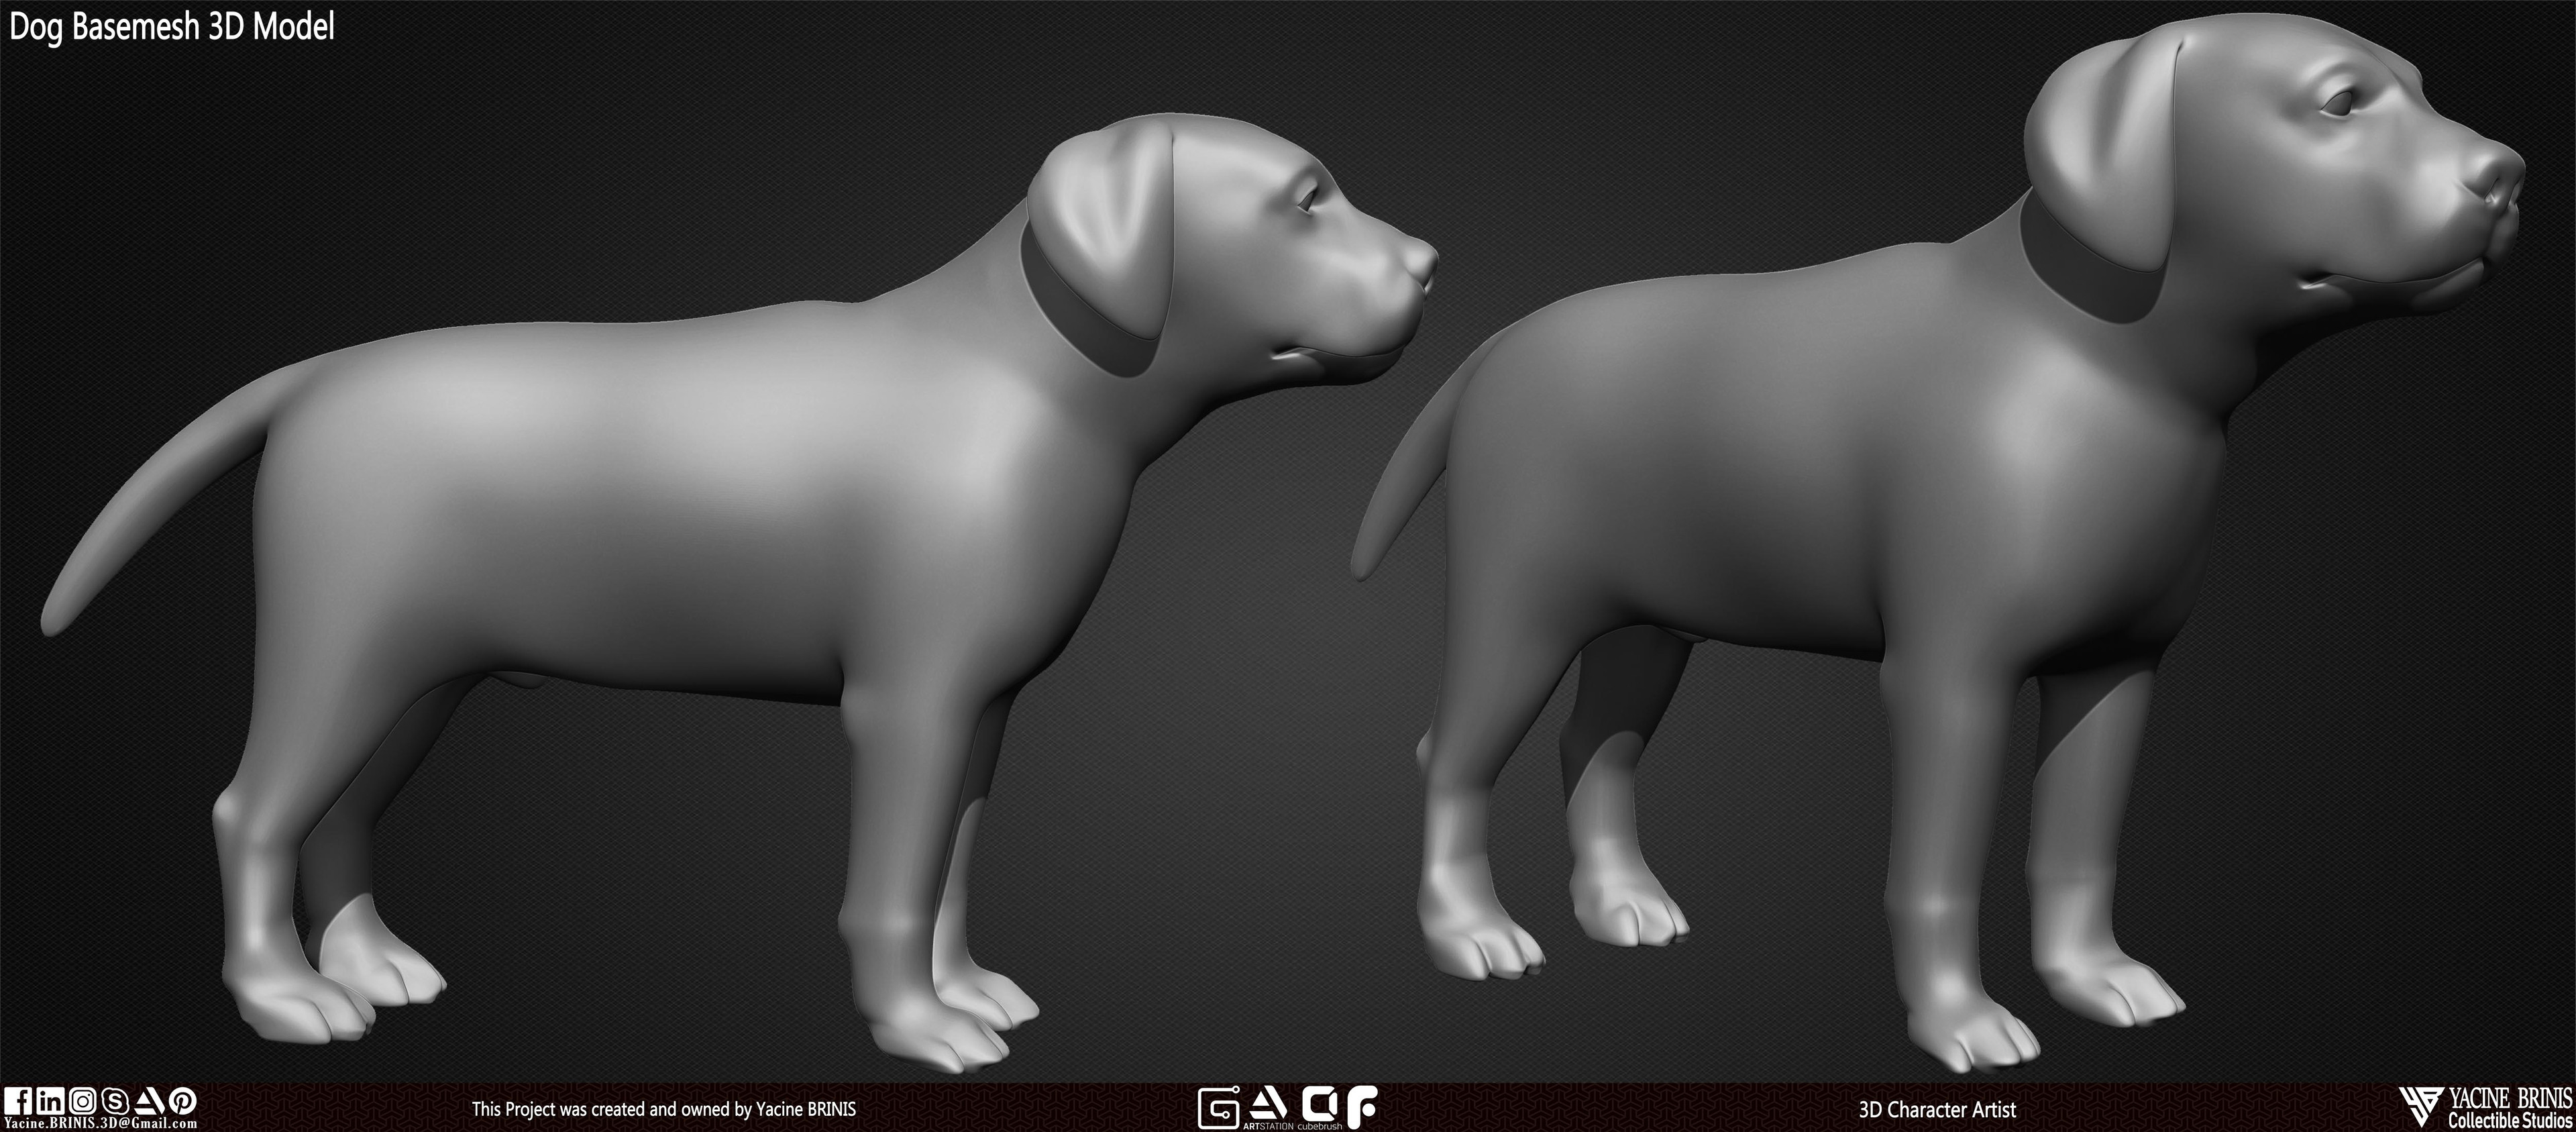 Dog Basemesh 3D Model Vol 01 sculpted By Yacine BRINIS Set 006